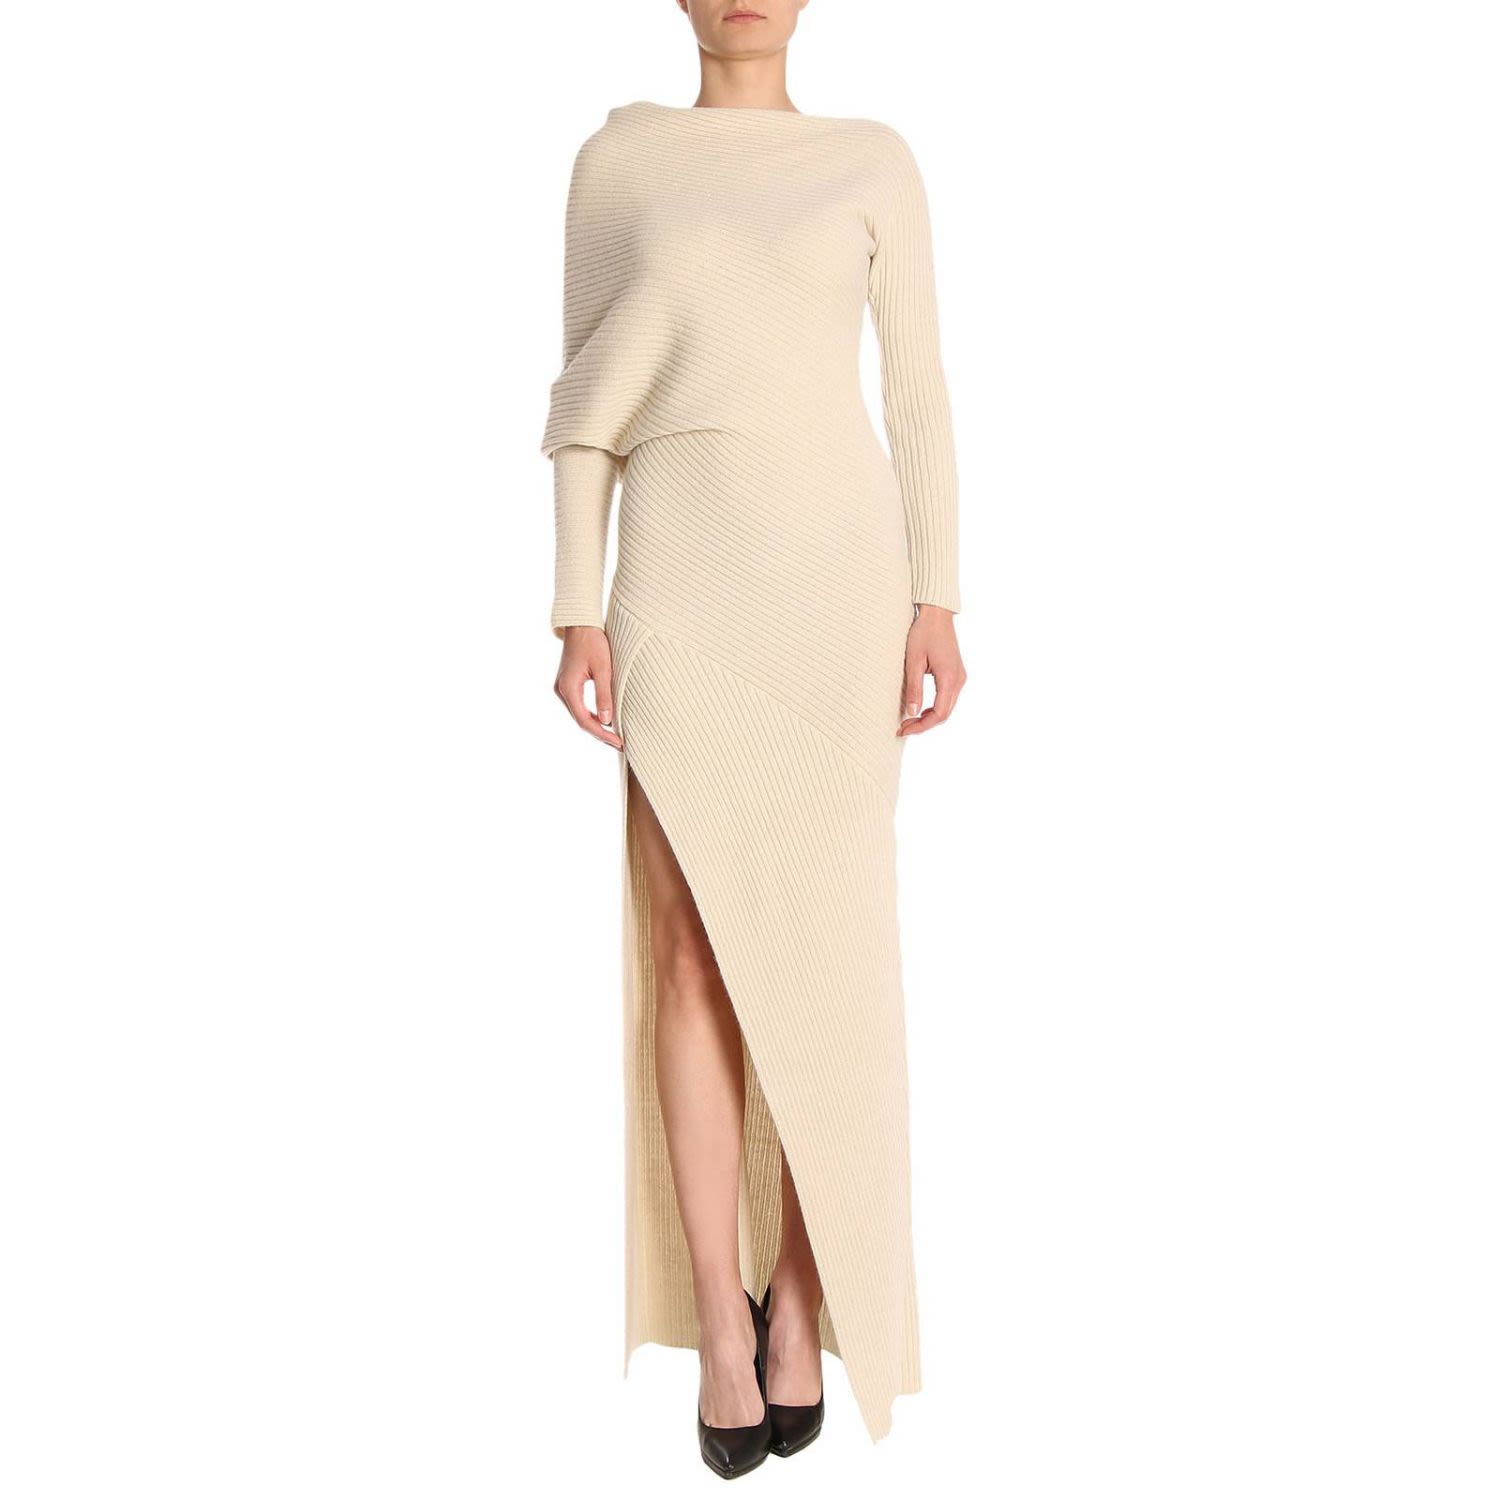 dressing gownRTO CAVALLI DRESS DRESS WOMEN ROBERTO CAVALLI,10617159